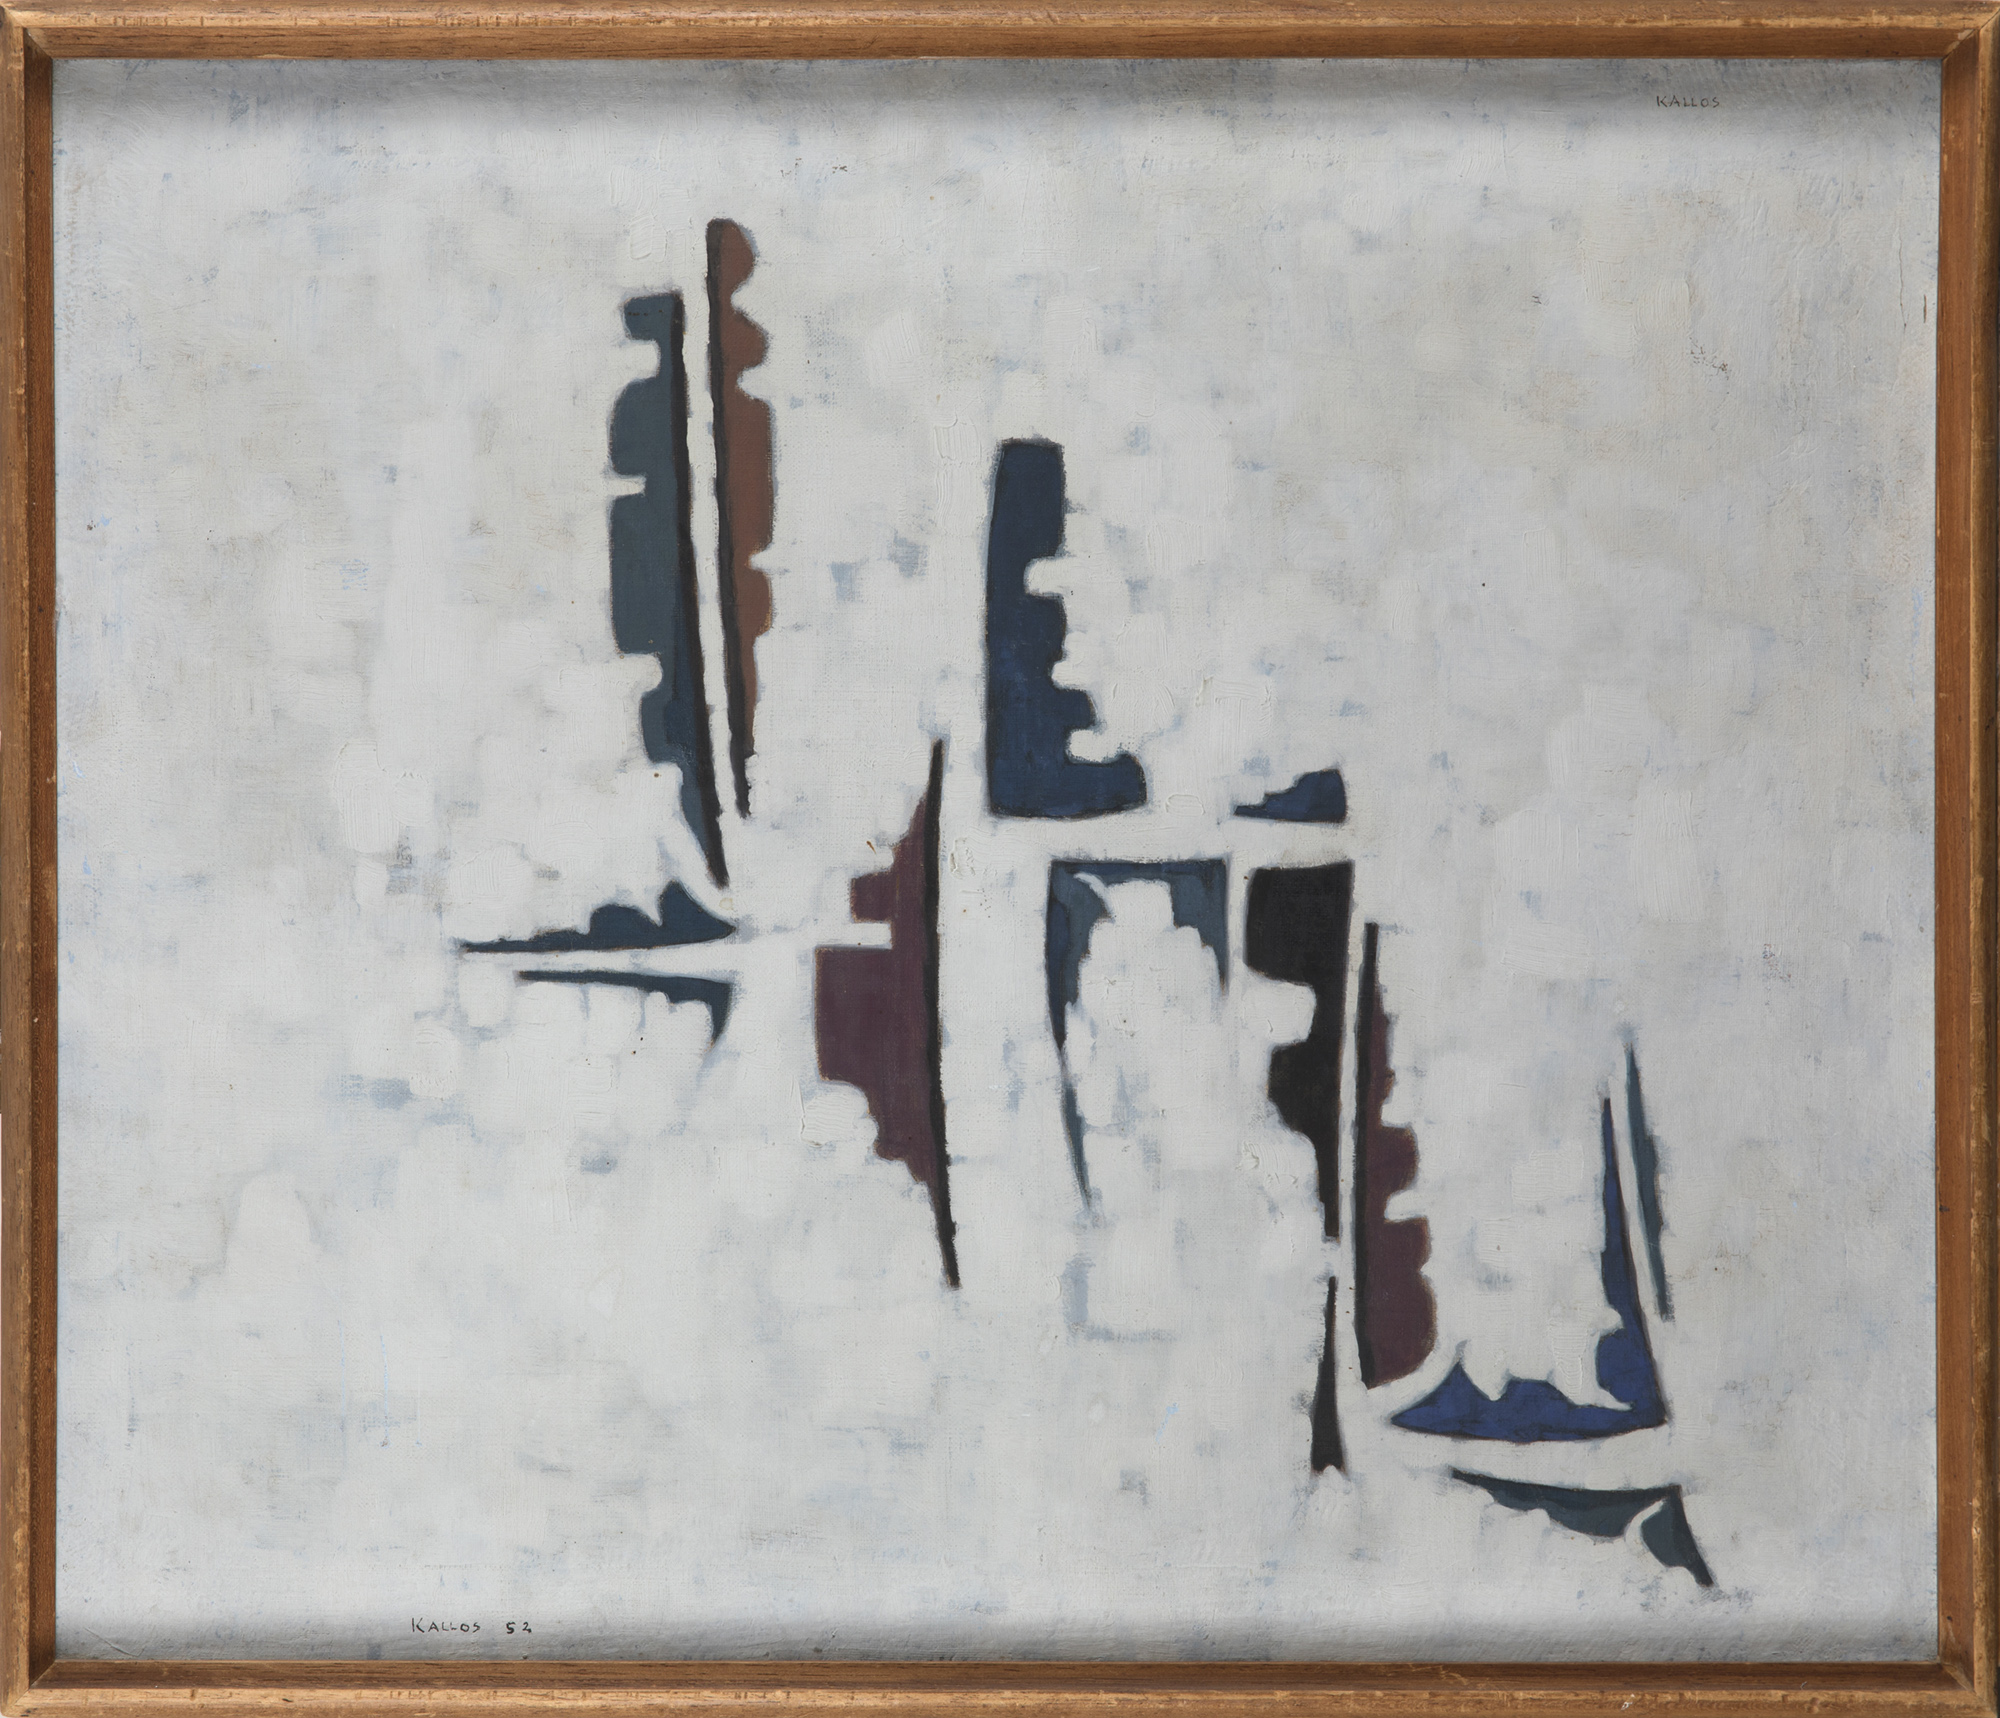 Paul Kallos (1928-2001)Untitled 1952, oil on canvas, signed, 21" x 25".